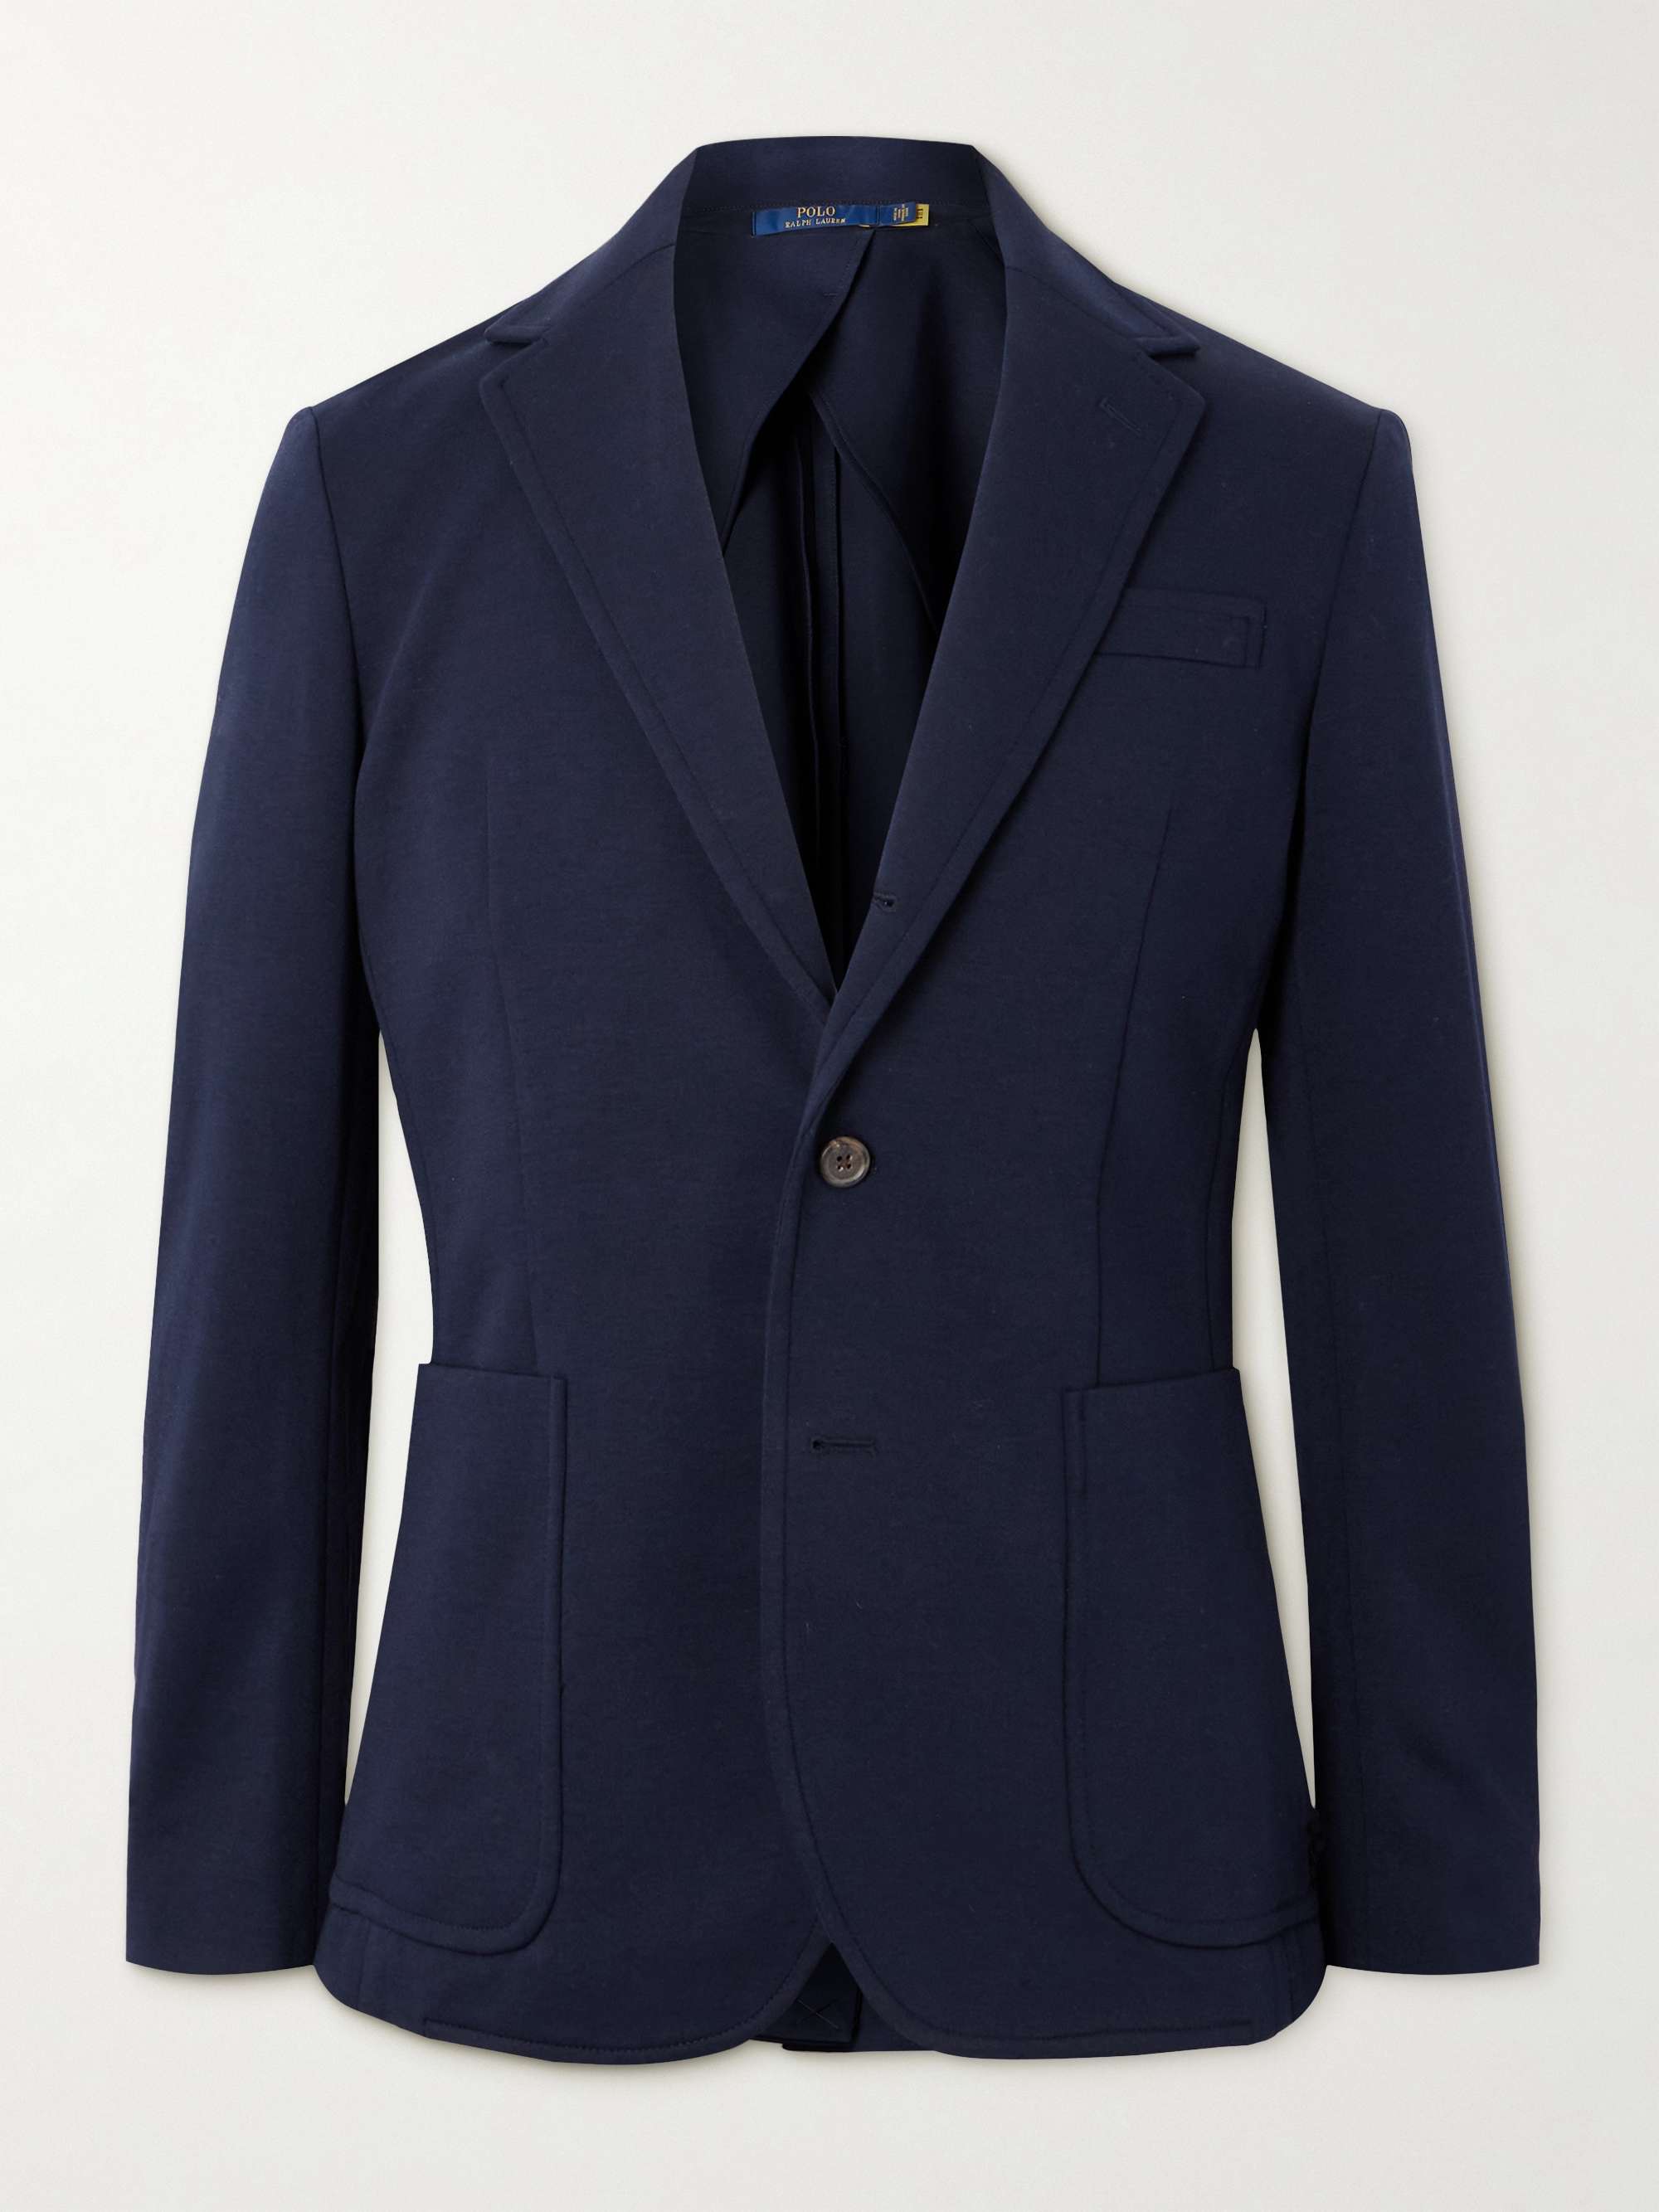 POLO RALPH LAUREN Slim-Fit Knitted Suit Jacket for Men | MR PORTER